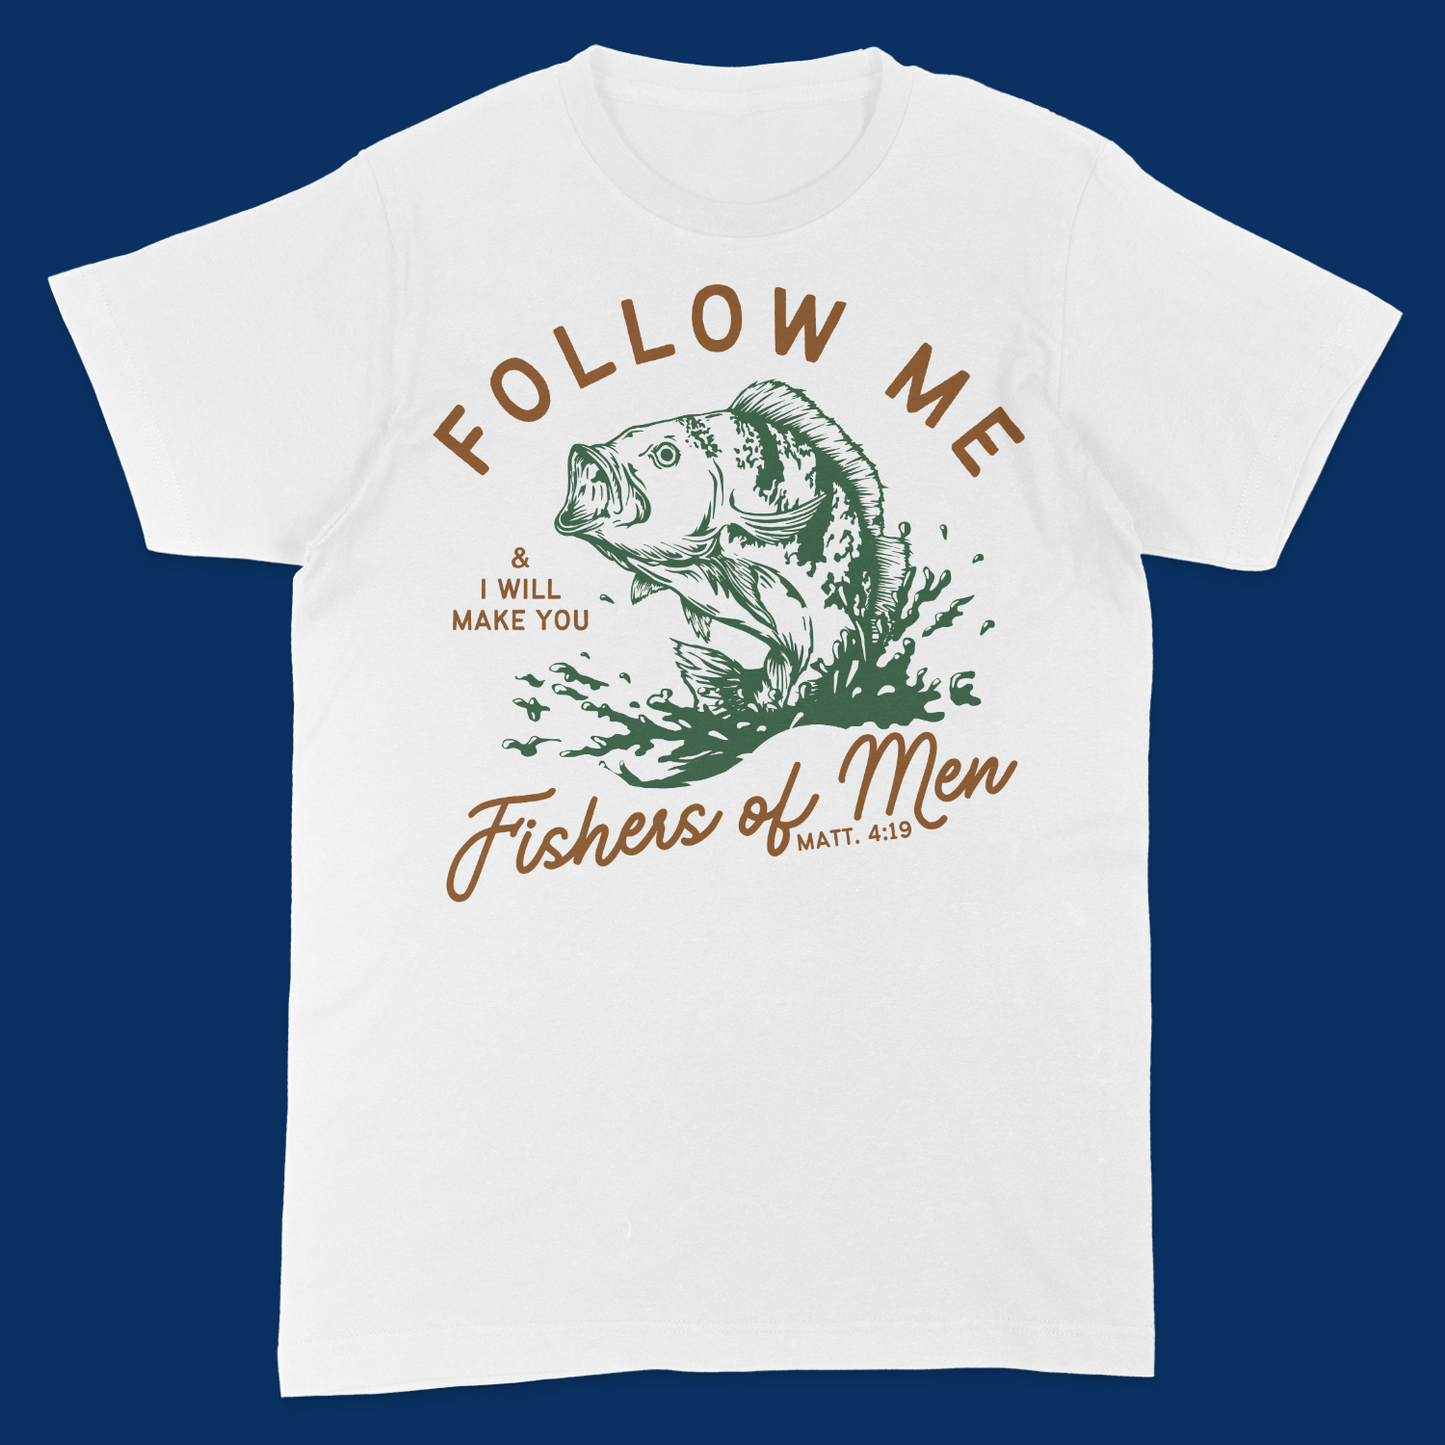 Fishers of Men T-Shirt